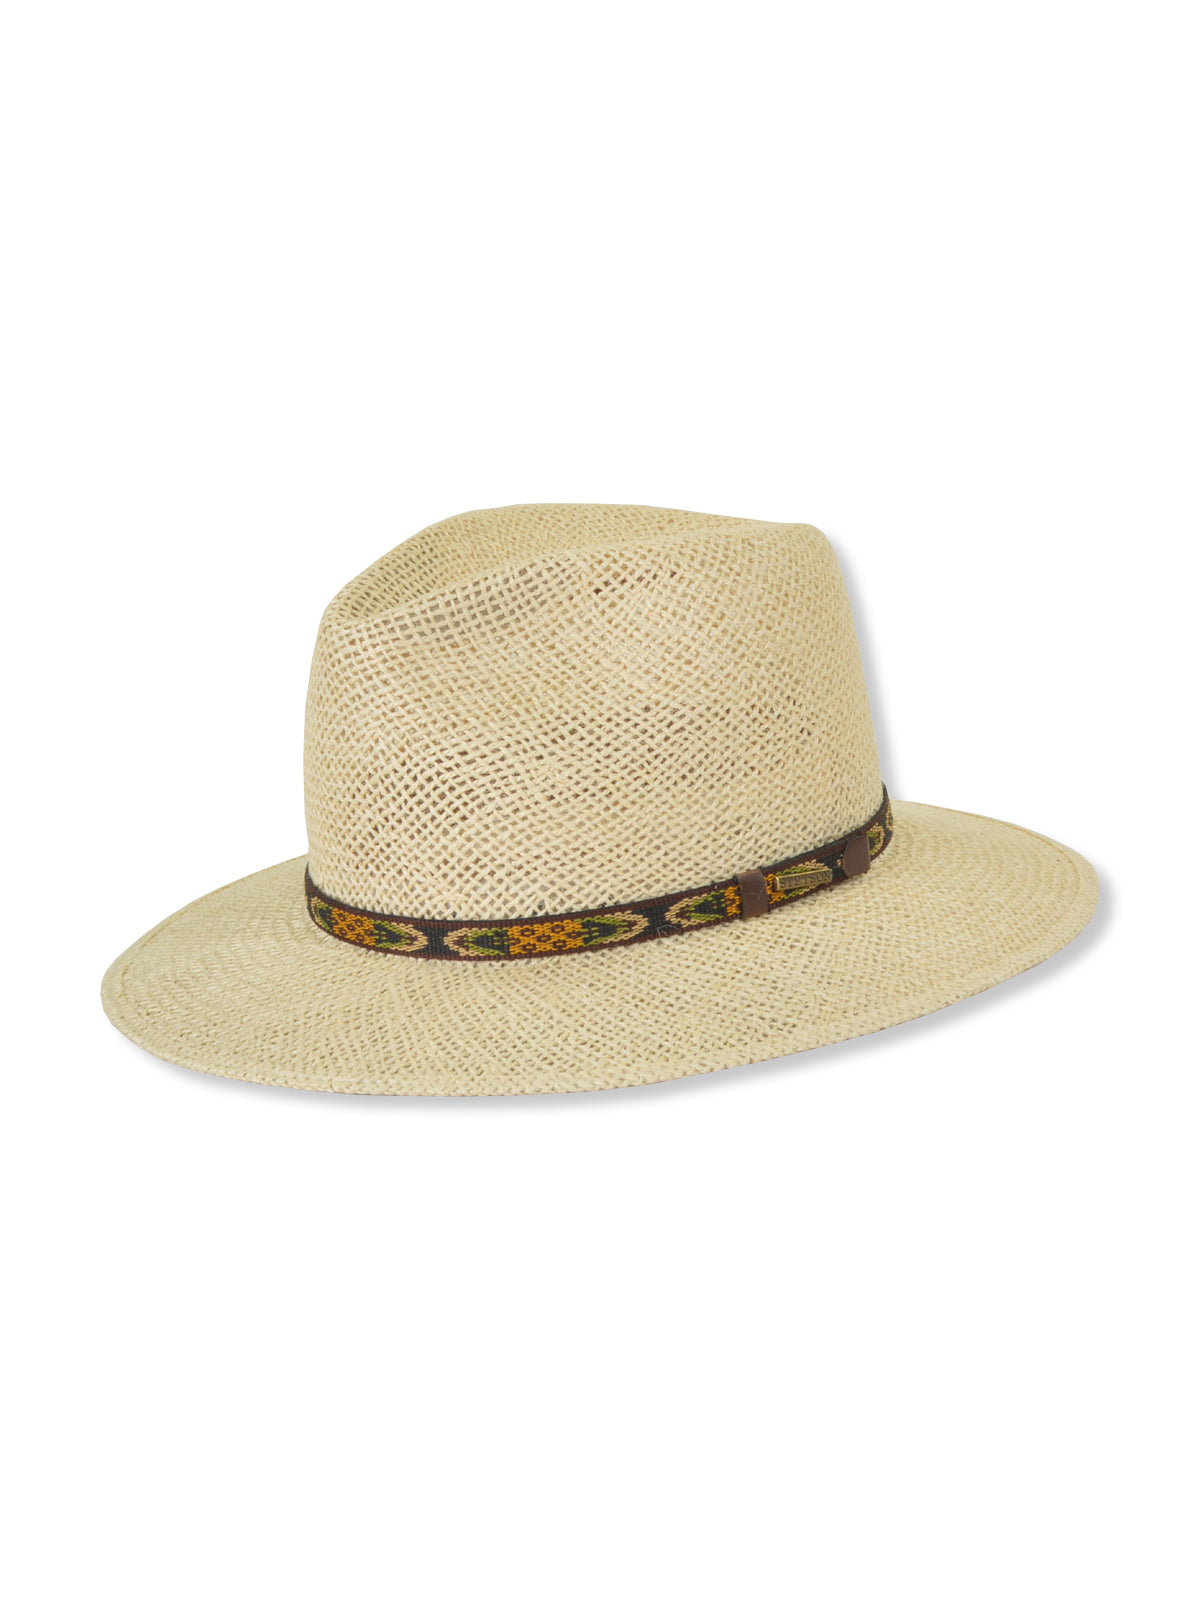 Stetson 'Merrill' Twisted Jute Straw Hats SSMERL-3830